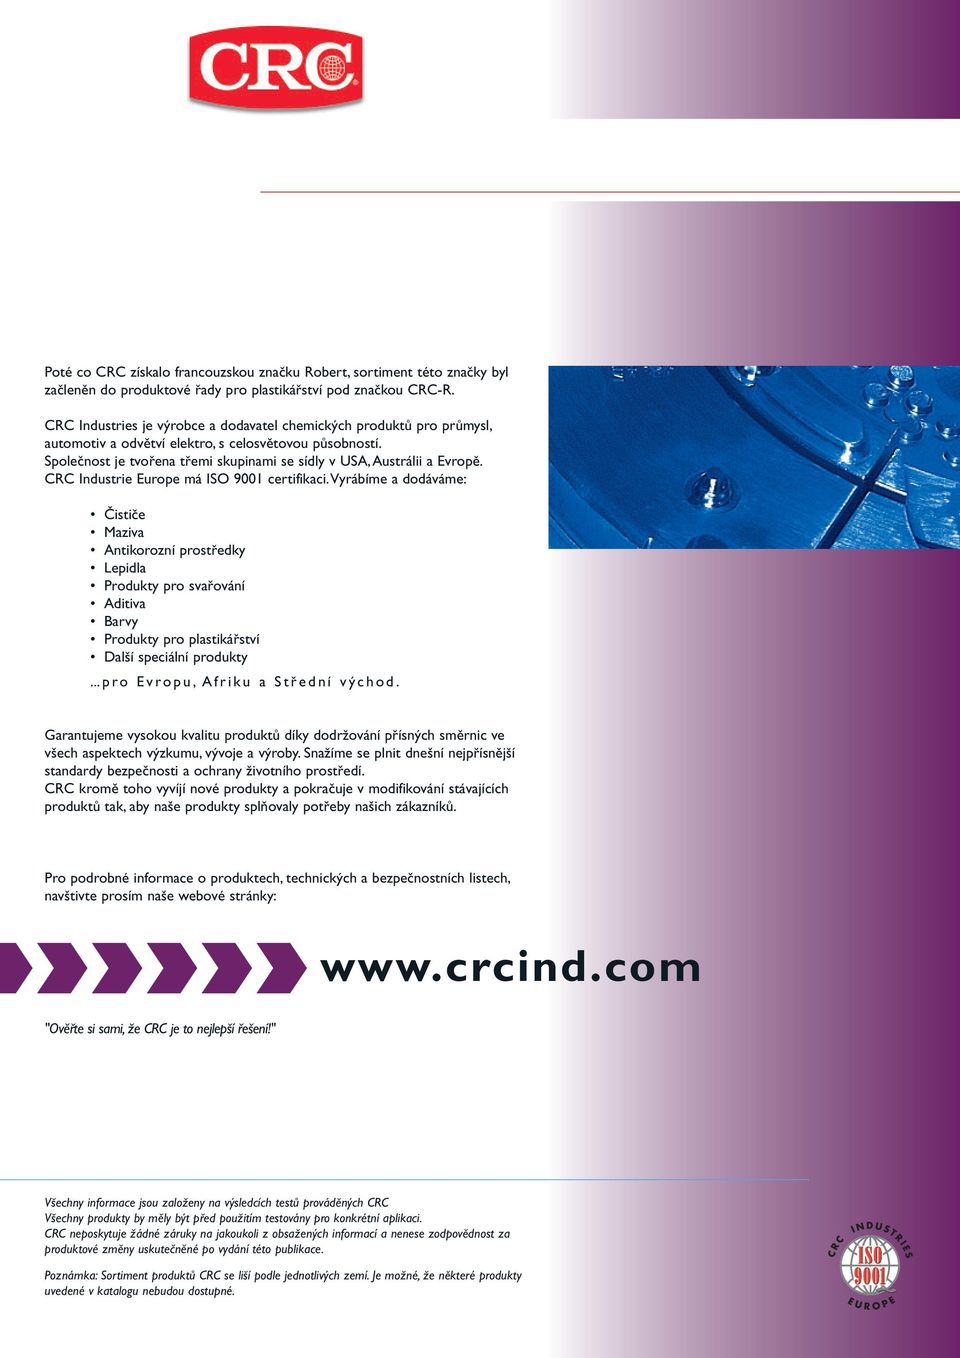 CRC Industrie Europe má ISO 9001 certifikaci.